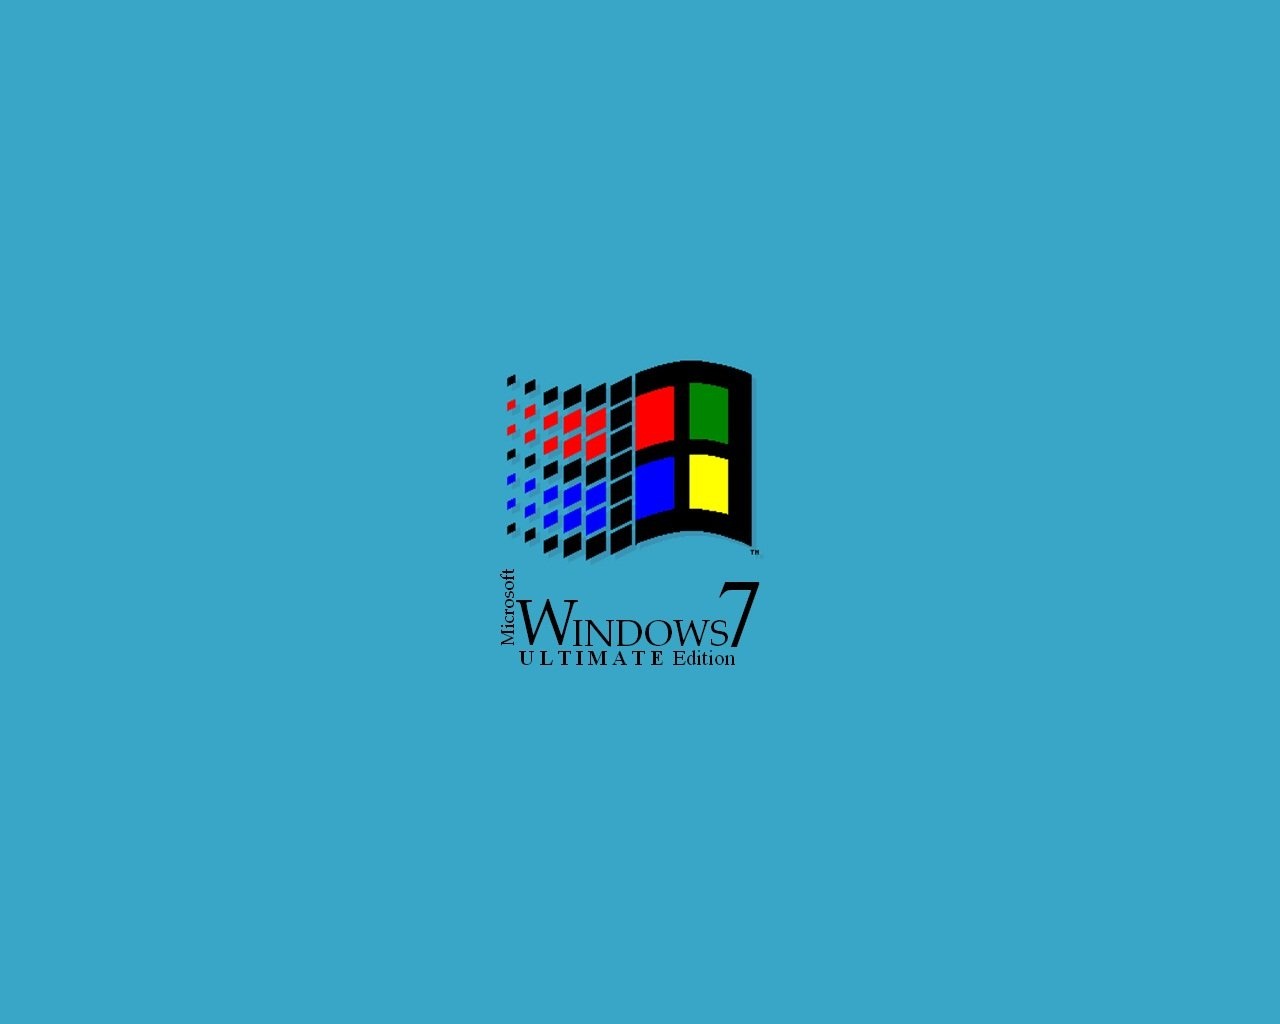 technology, windows 7 ultimate